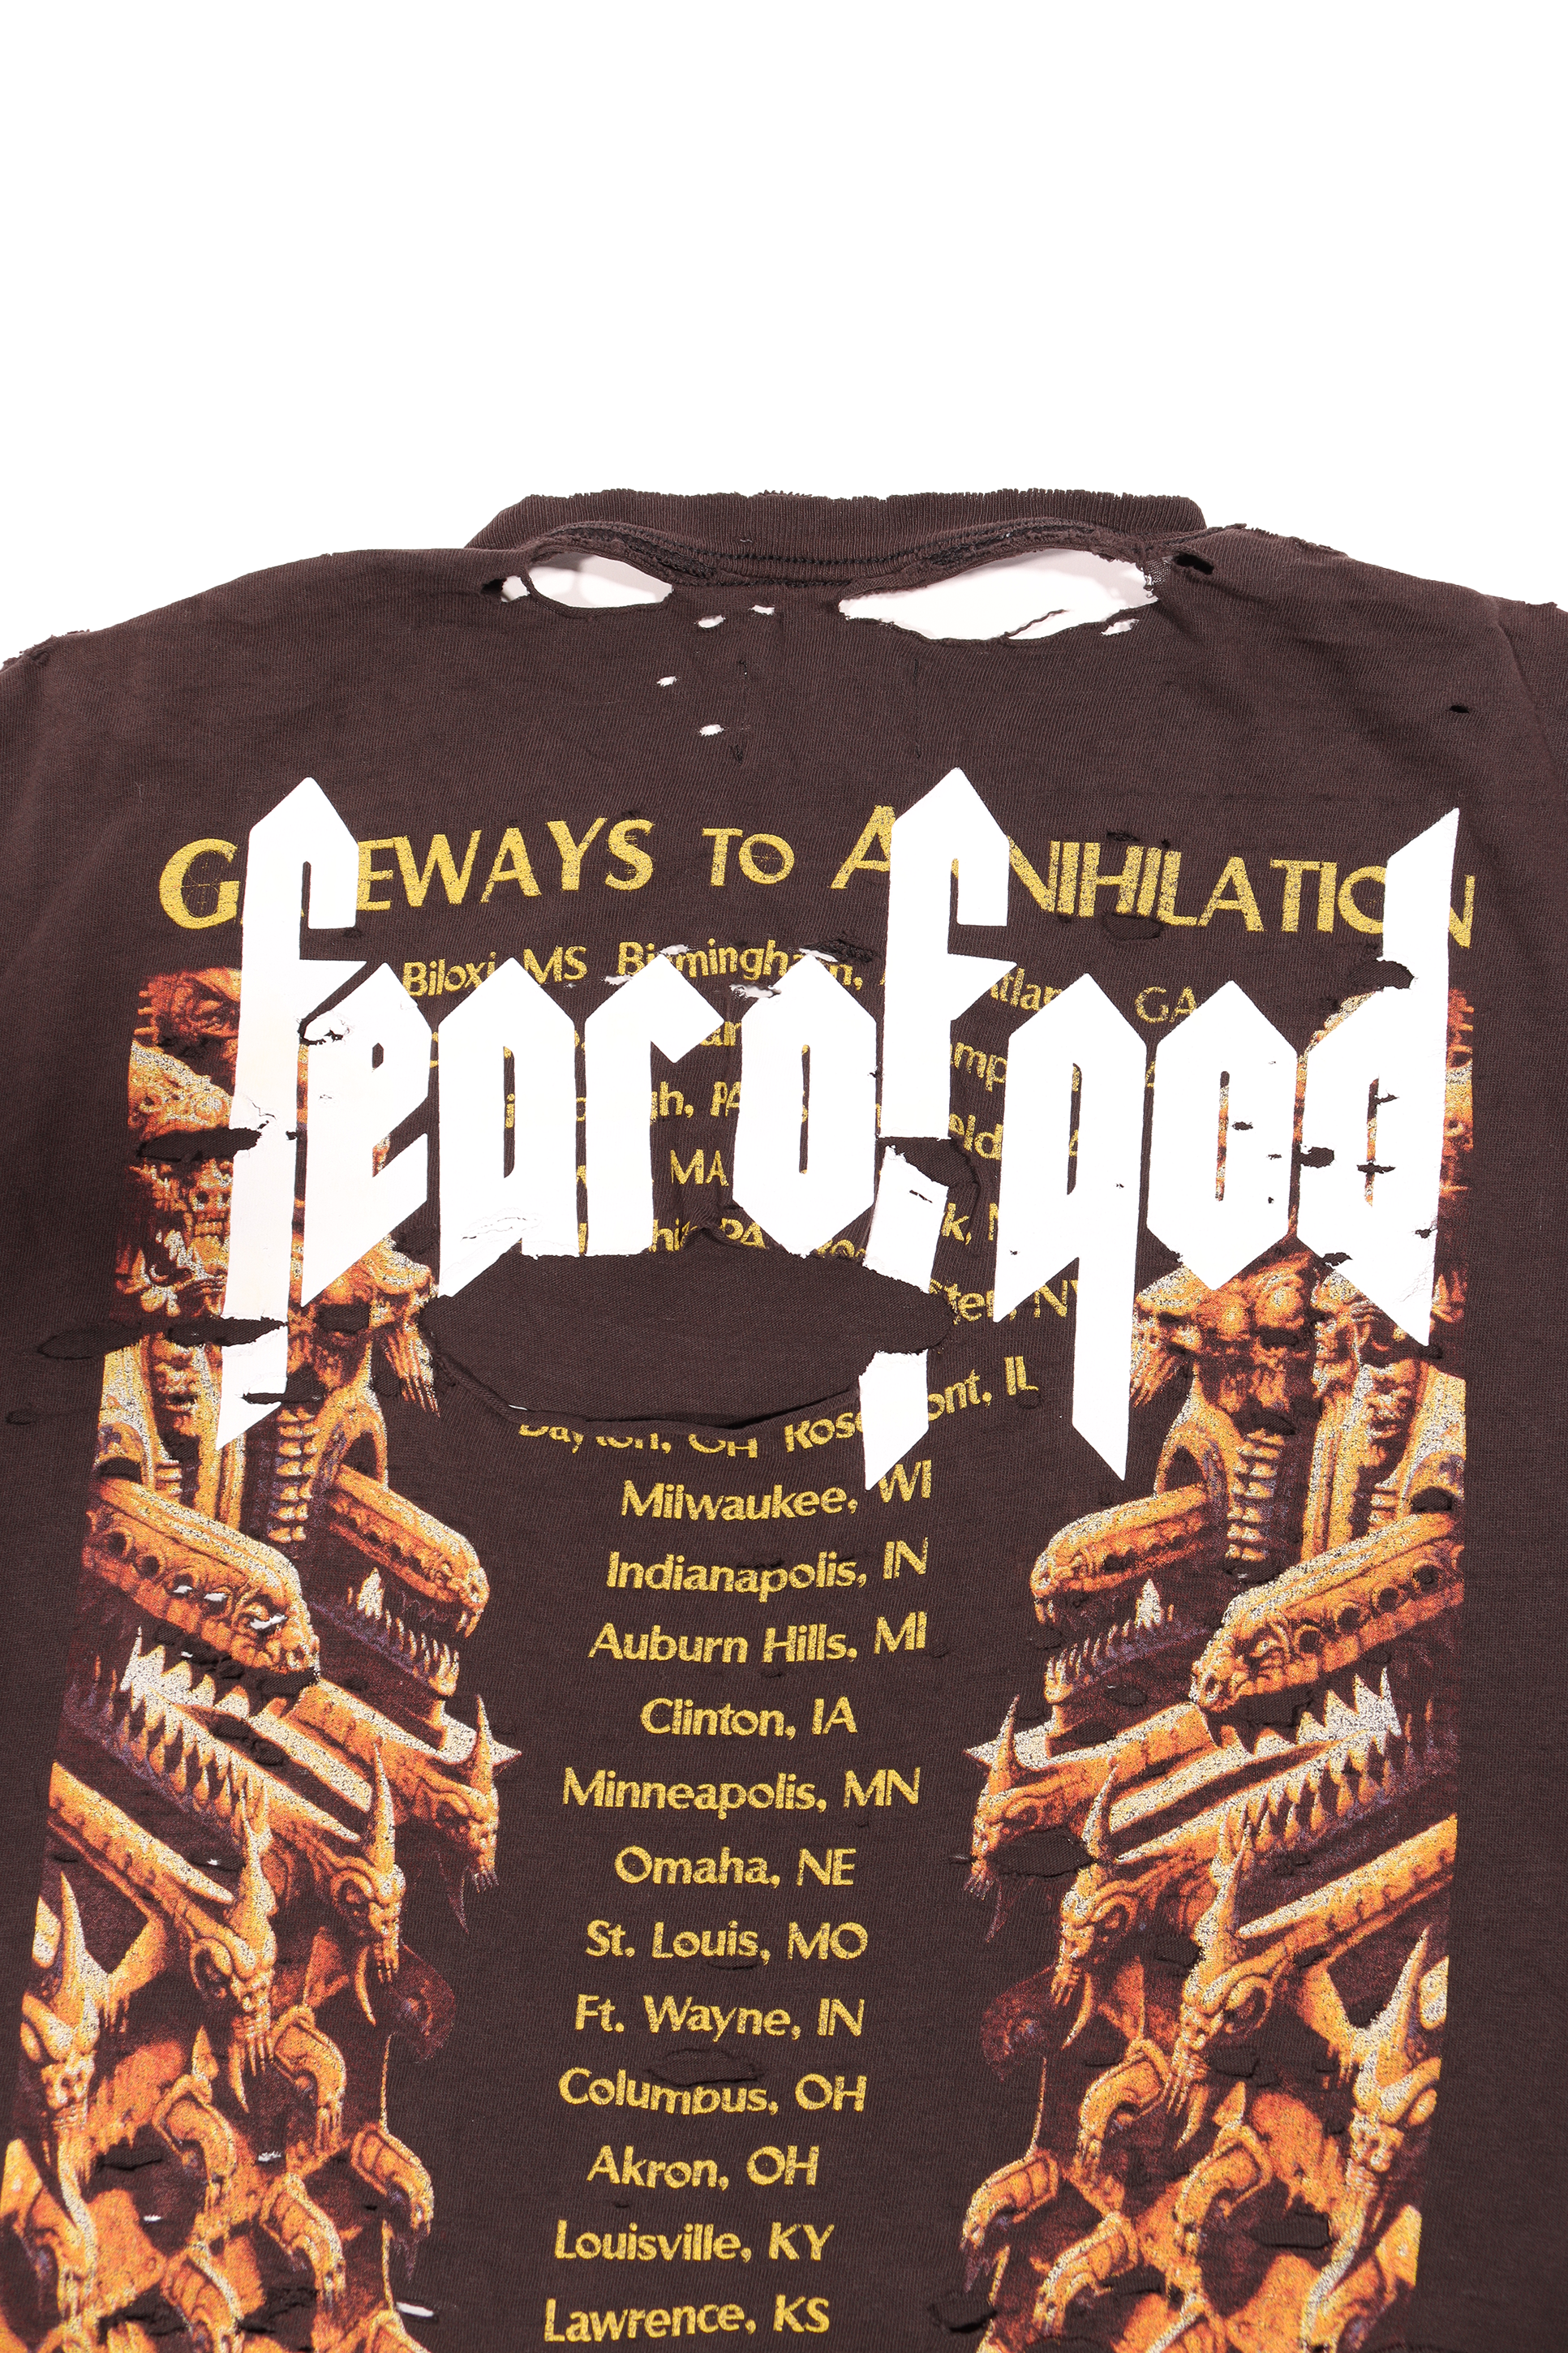 Union LA Exclusive Vintage Morbid Angel Rock T-Shirt